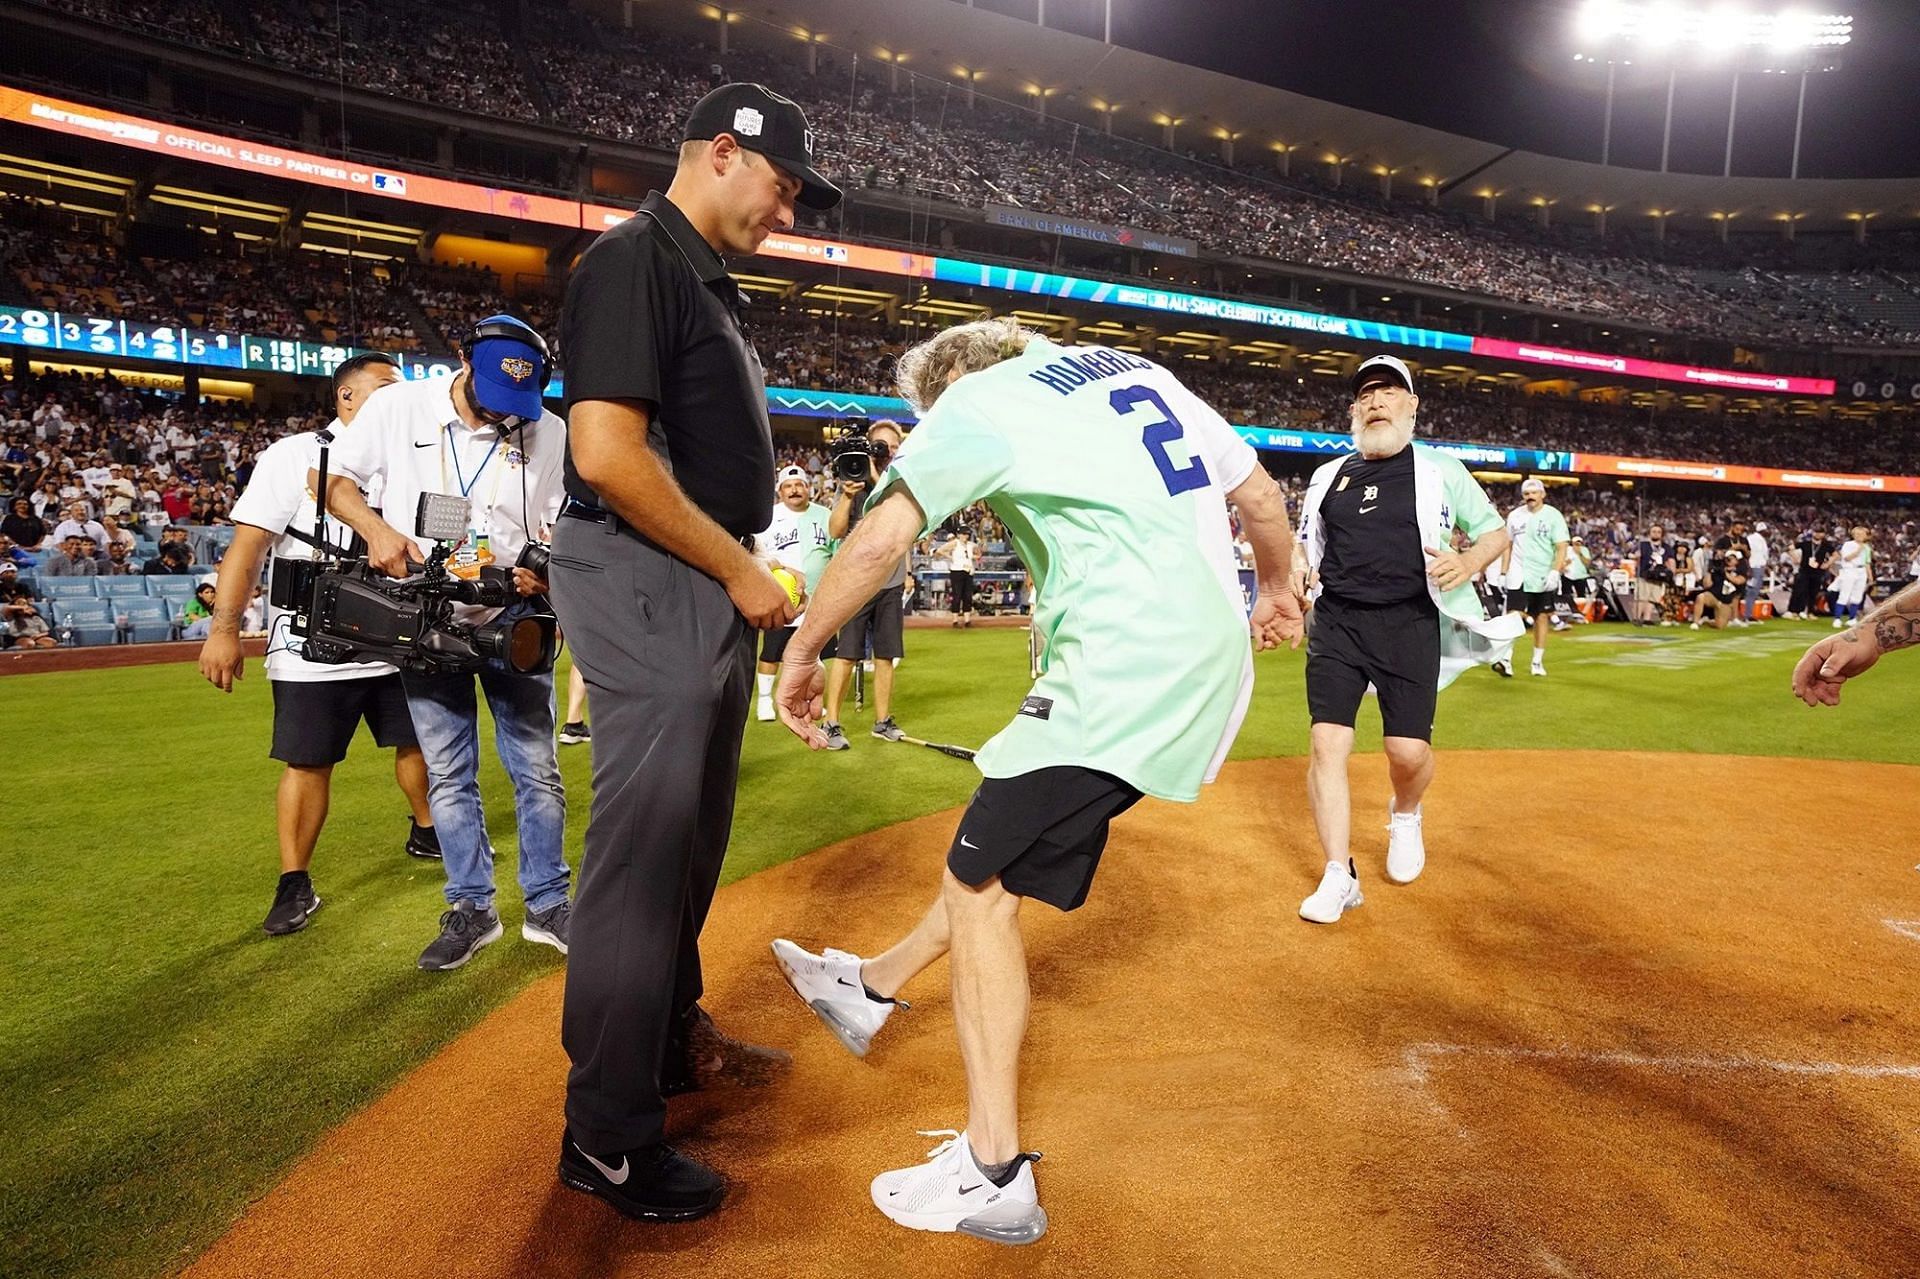 Bryan Cranston kicks dirt on the umpire during the All-Star Celebrity Softball game.